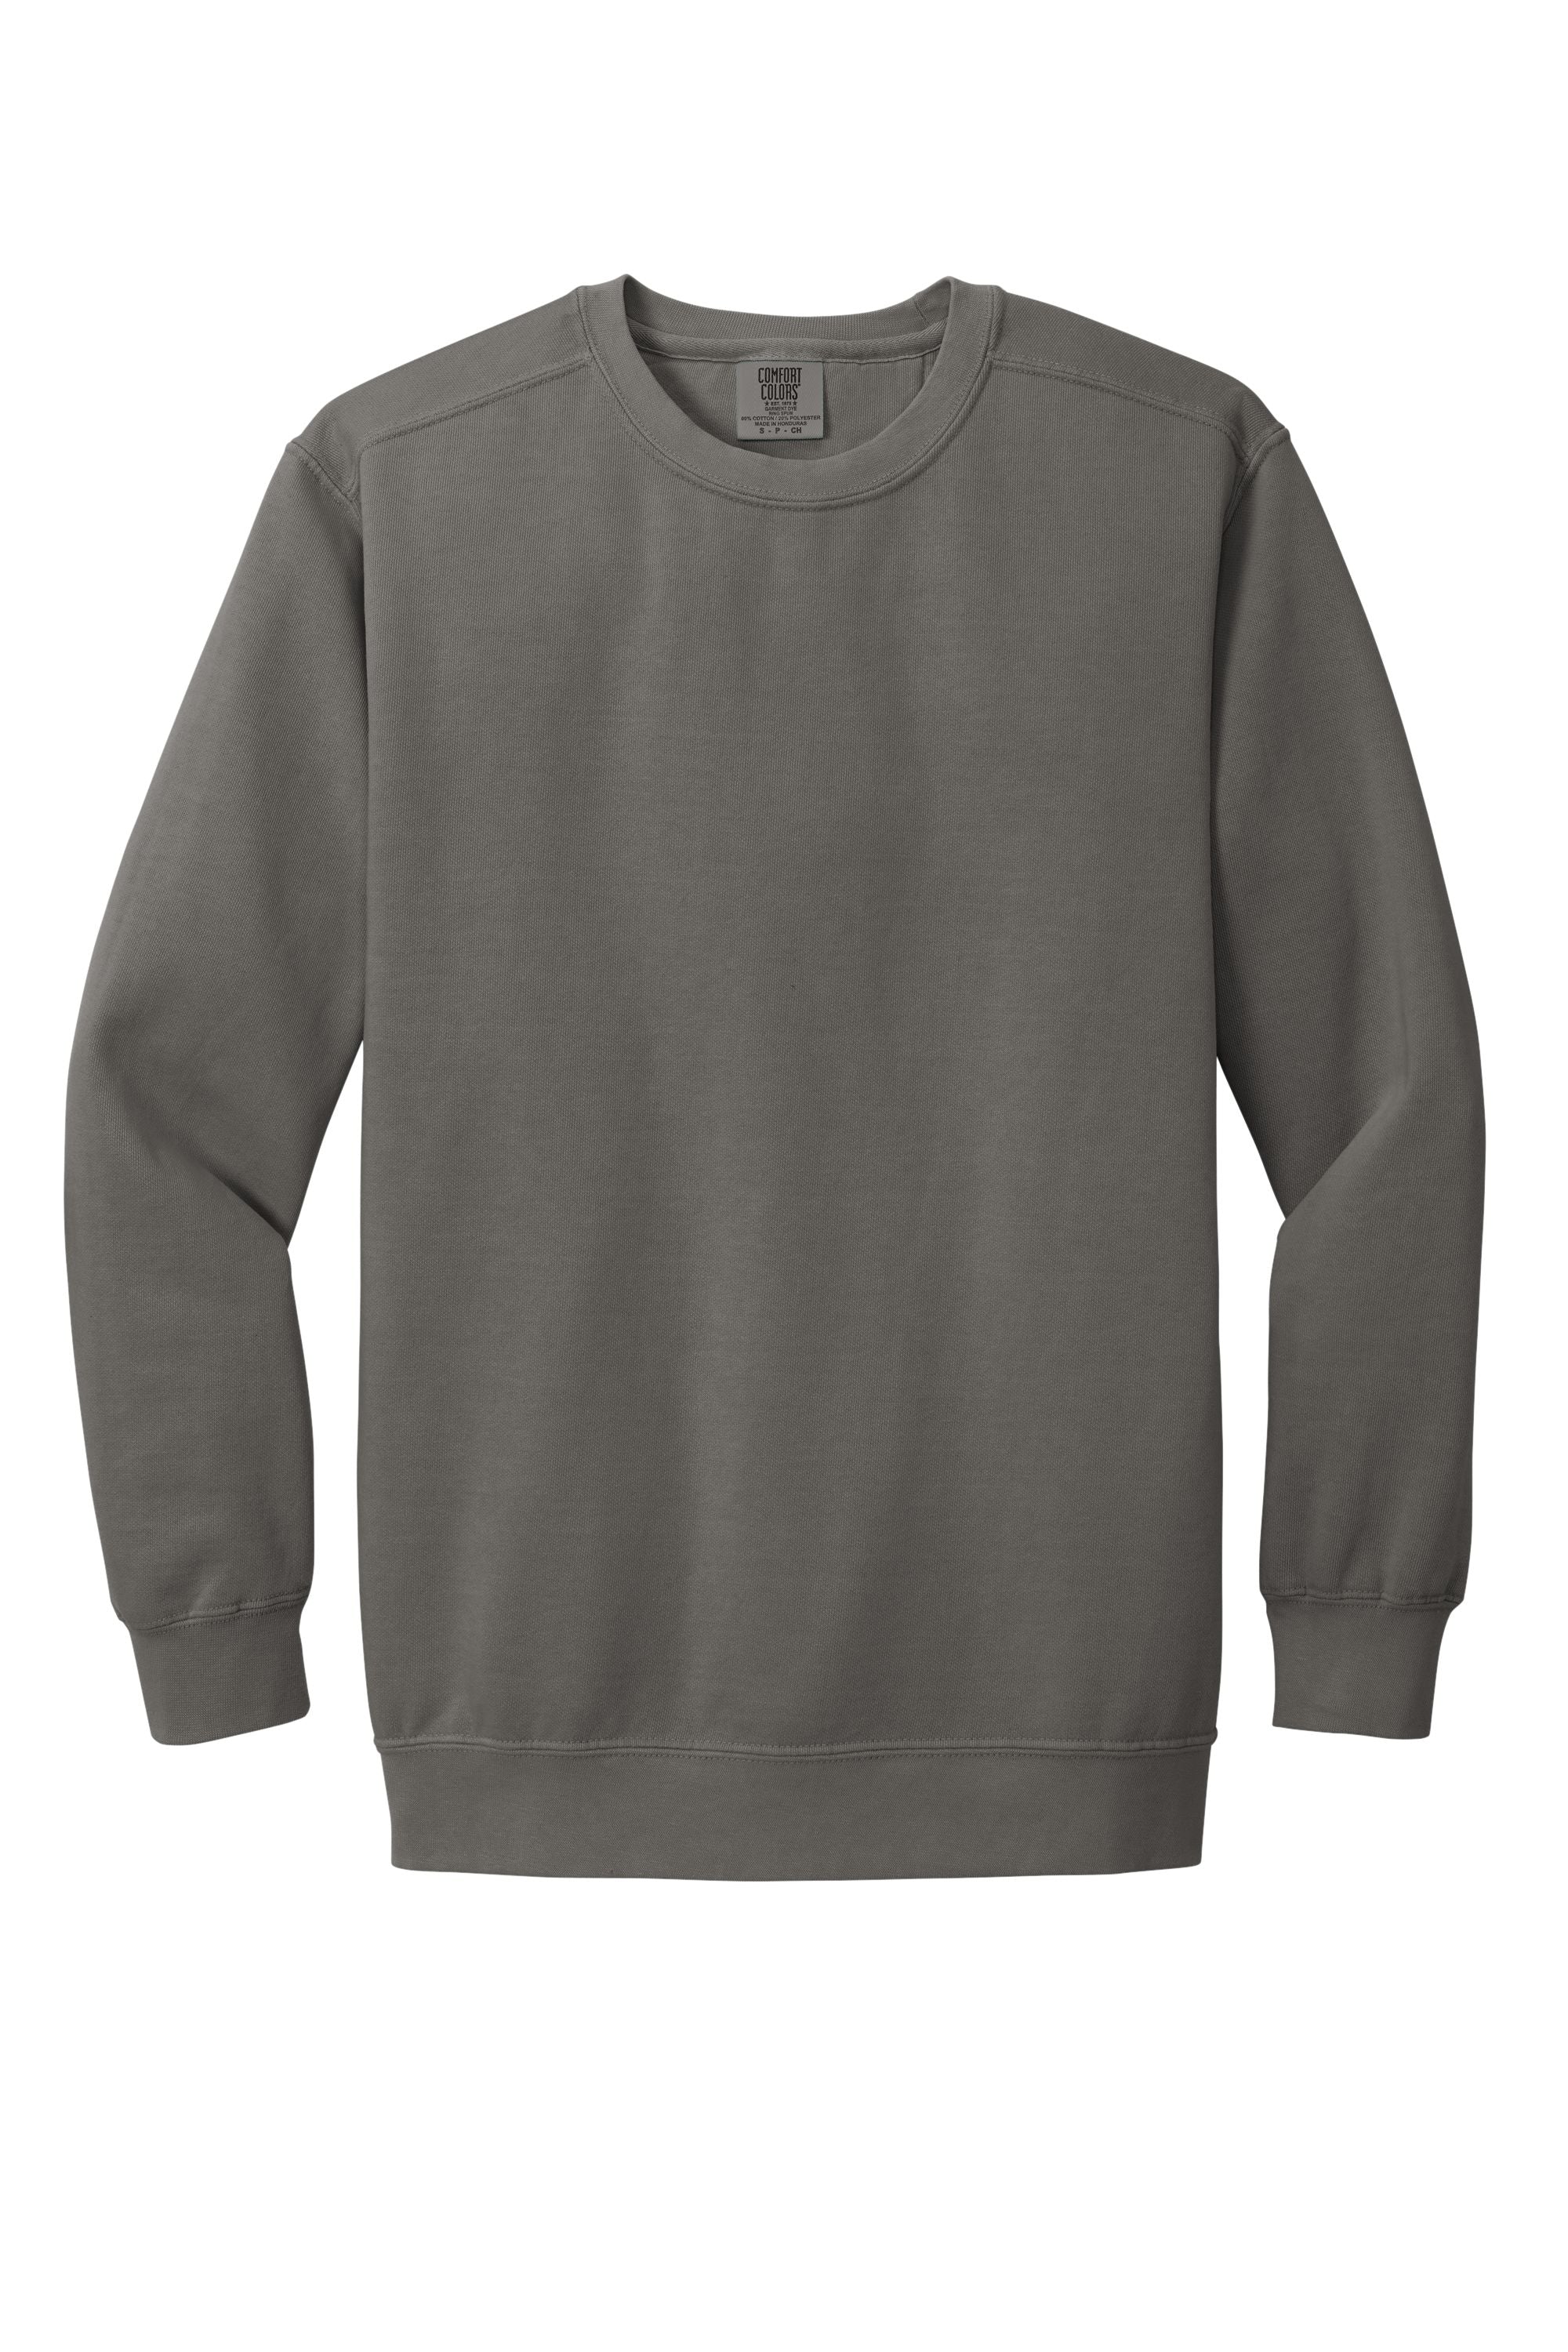 SENIOR 2023' Comfort Colors Sweatshirt